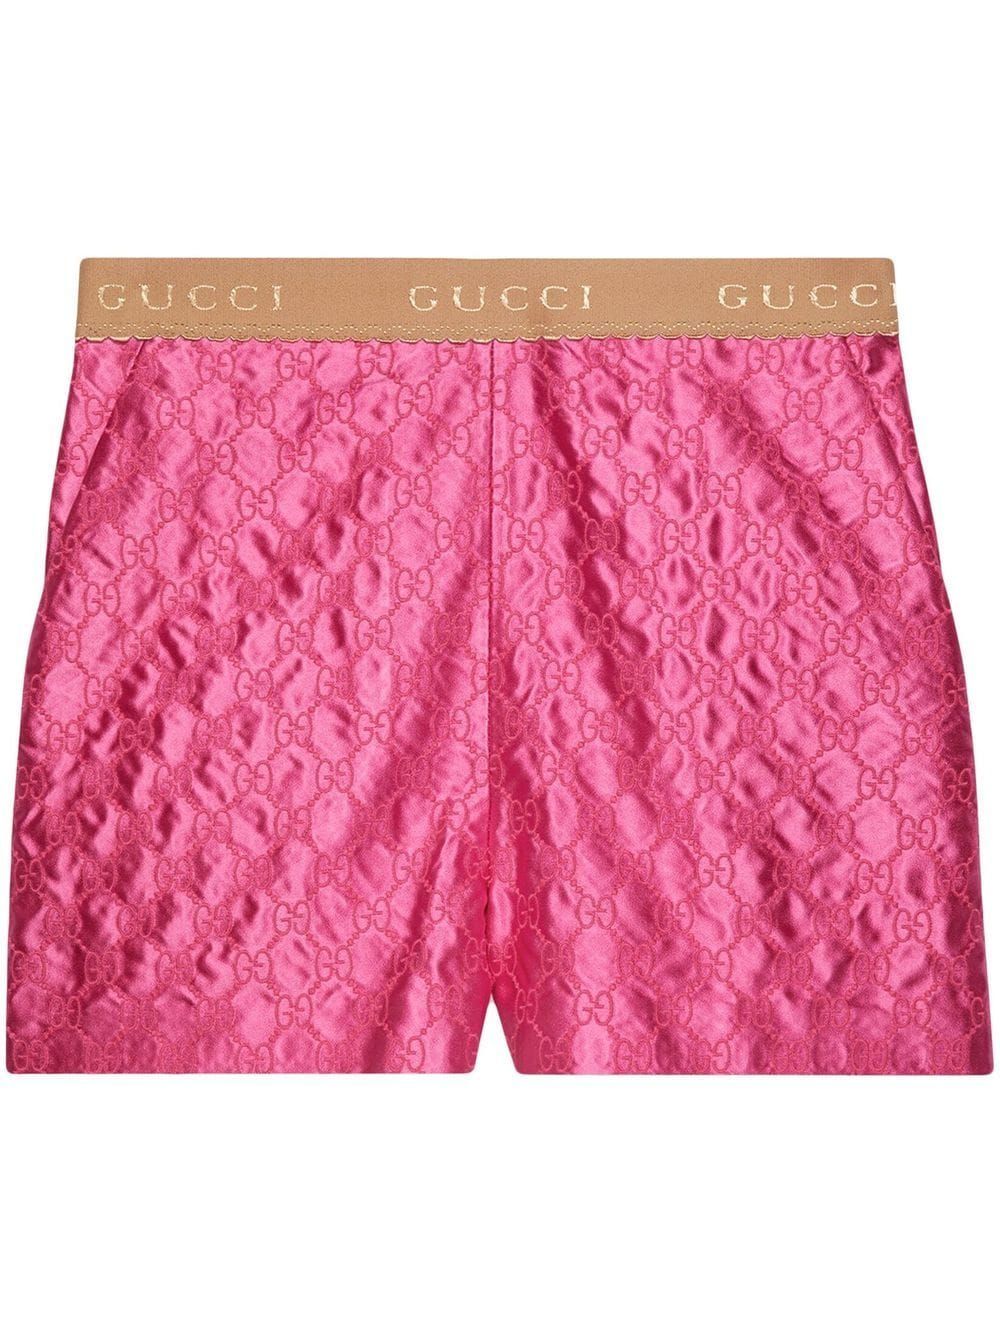 Gucciembroidered GG silk shorts | Farfetch Global